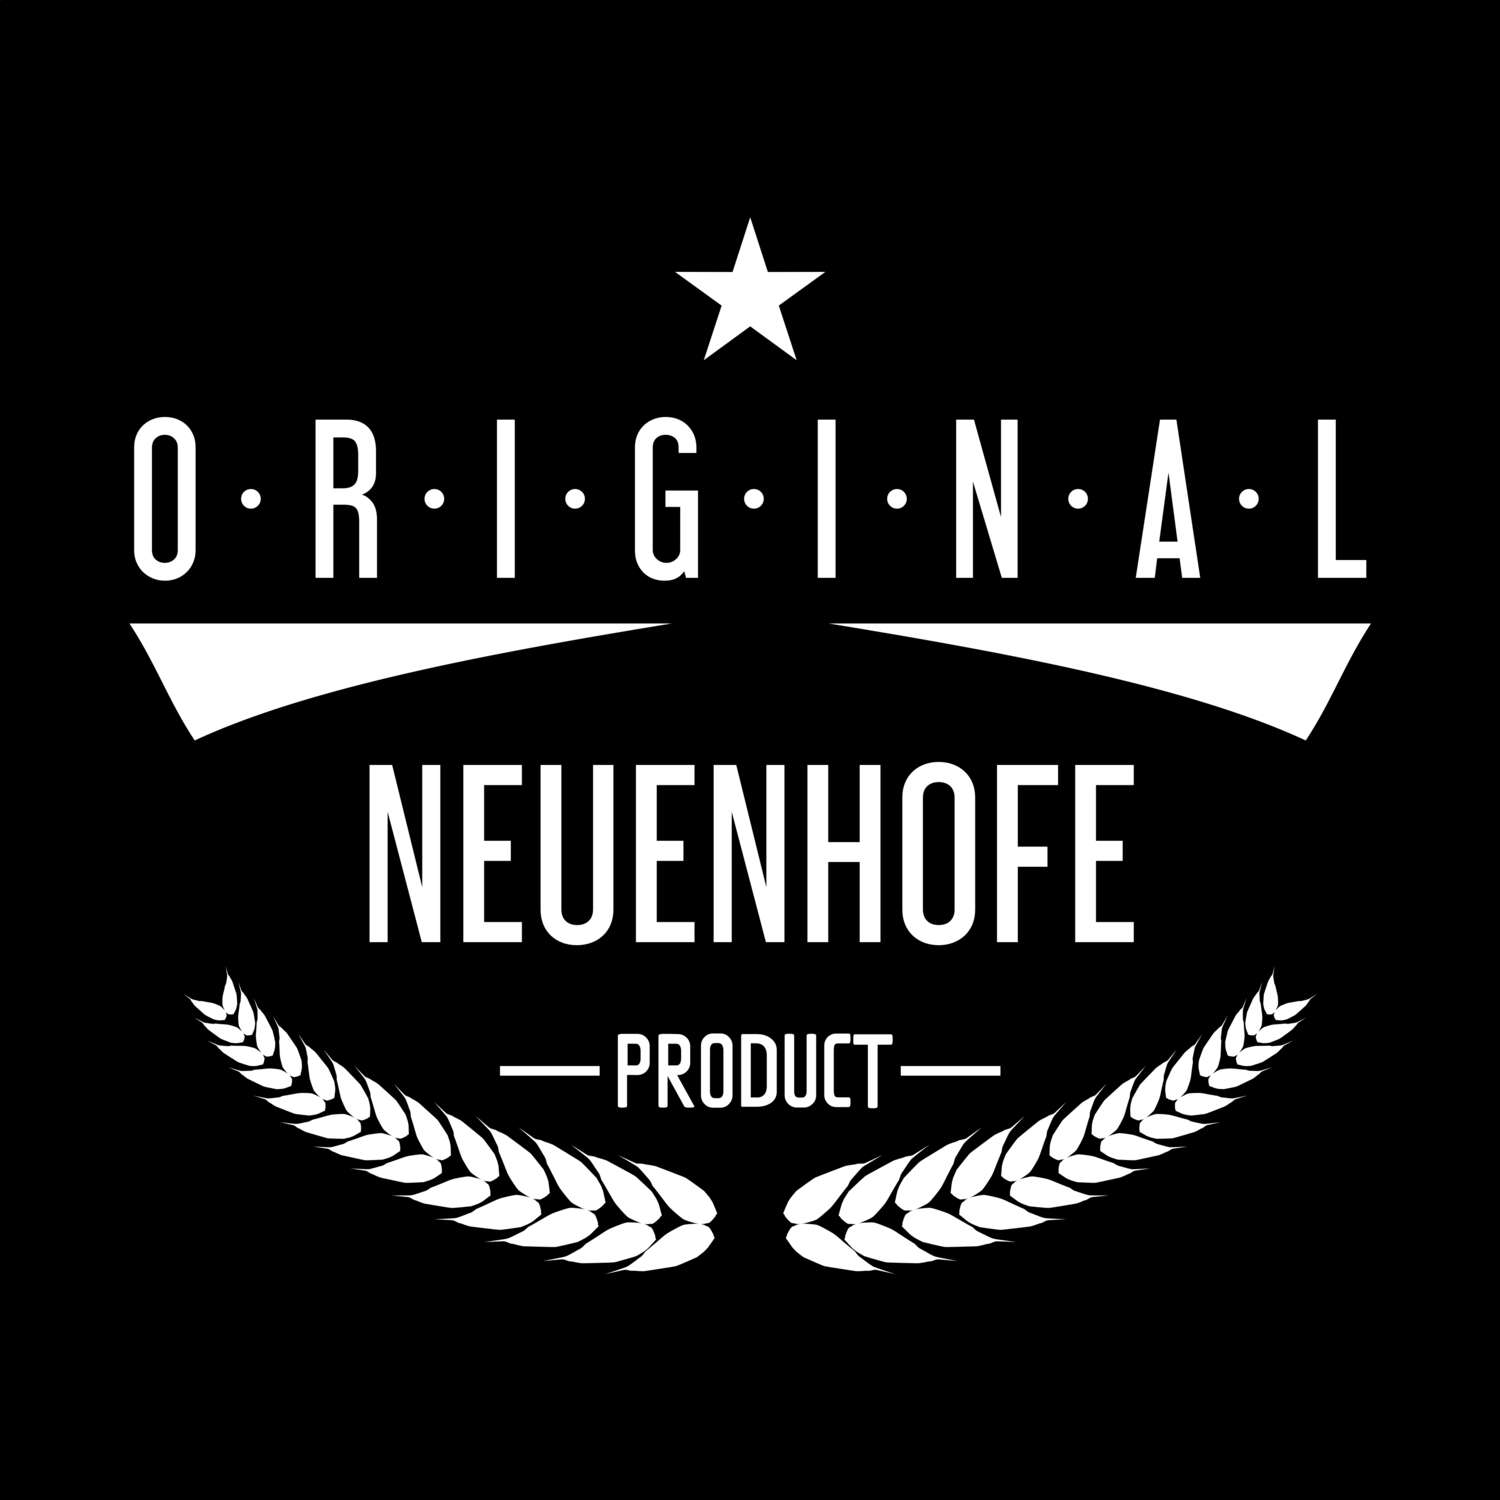 Neuenhofe T-Shirt »Original Product«